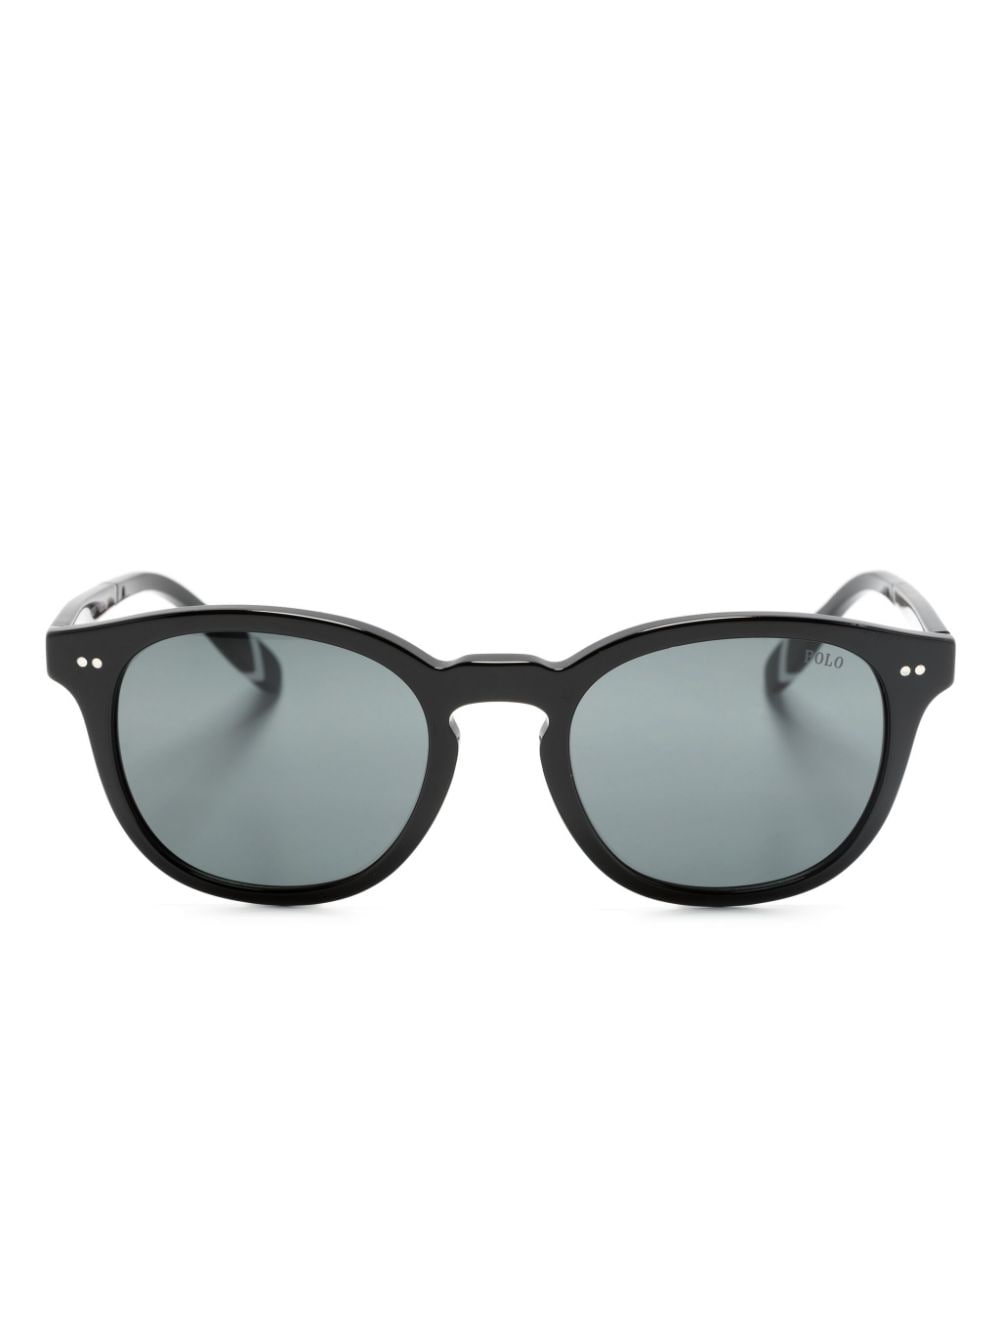 Polo Ralph Lauren tortoiseshell round-frame sunglasses - Black von Polo Ralph Lauren